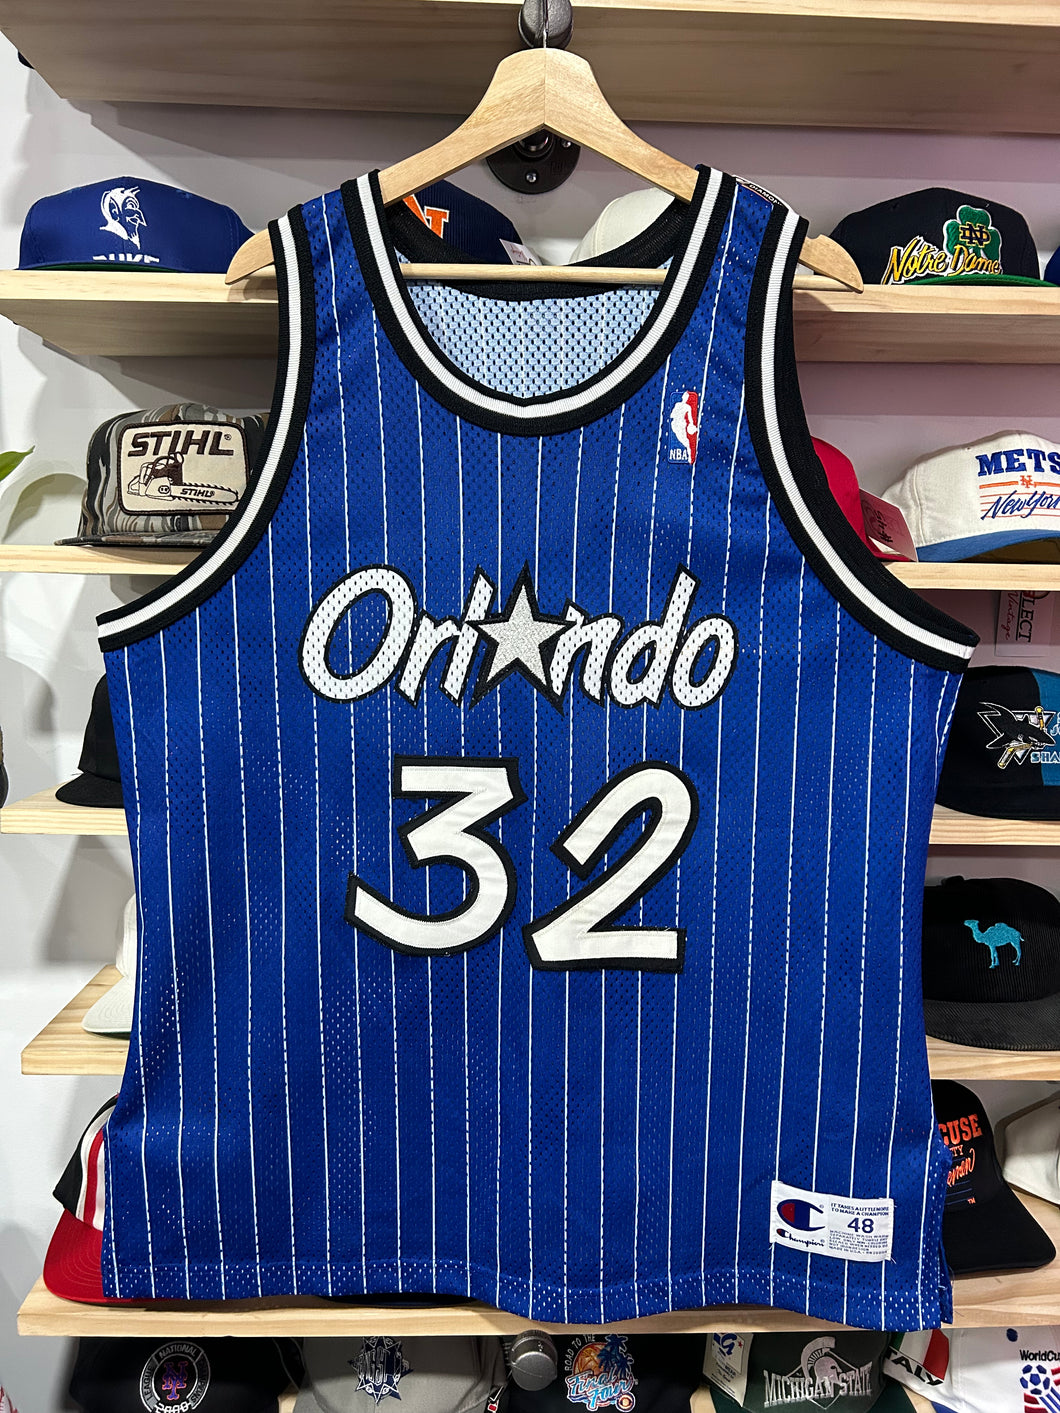 Vintage 90s Champion Orlando Magic Authentic Shaq Pinstriped Jersey Size 48 XL